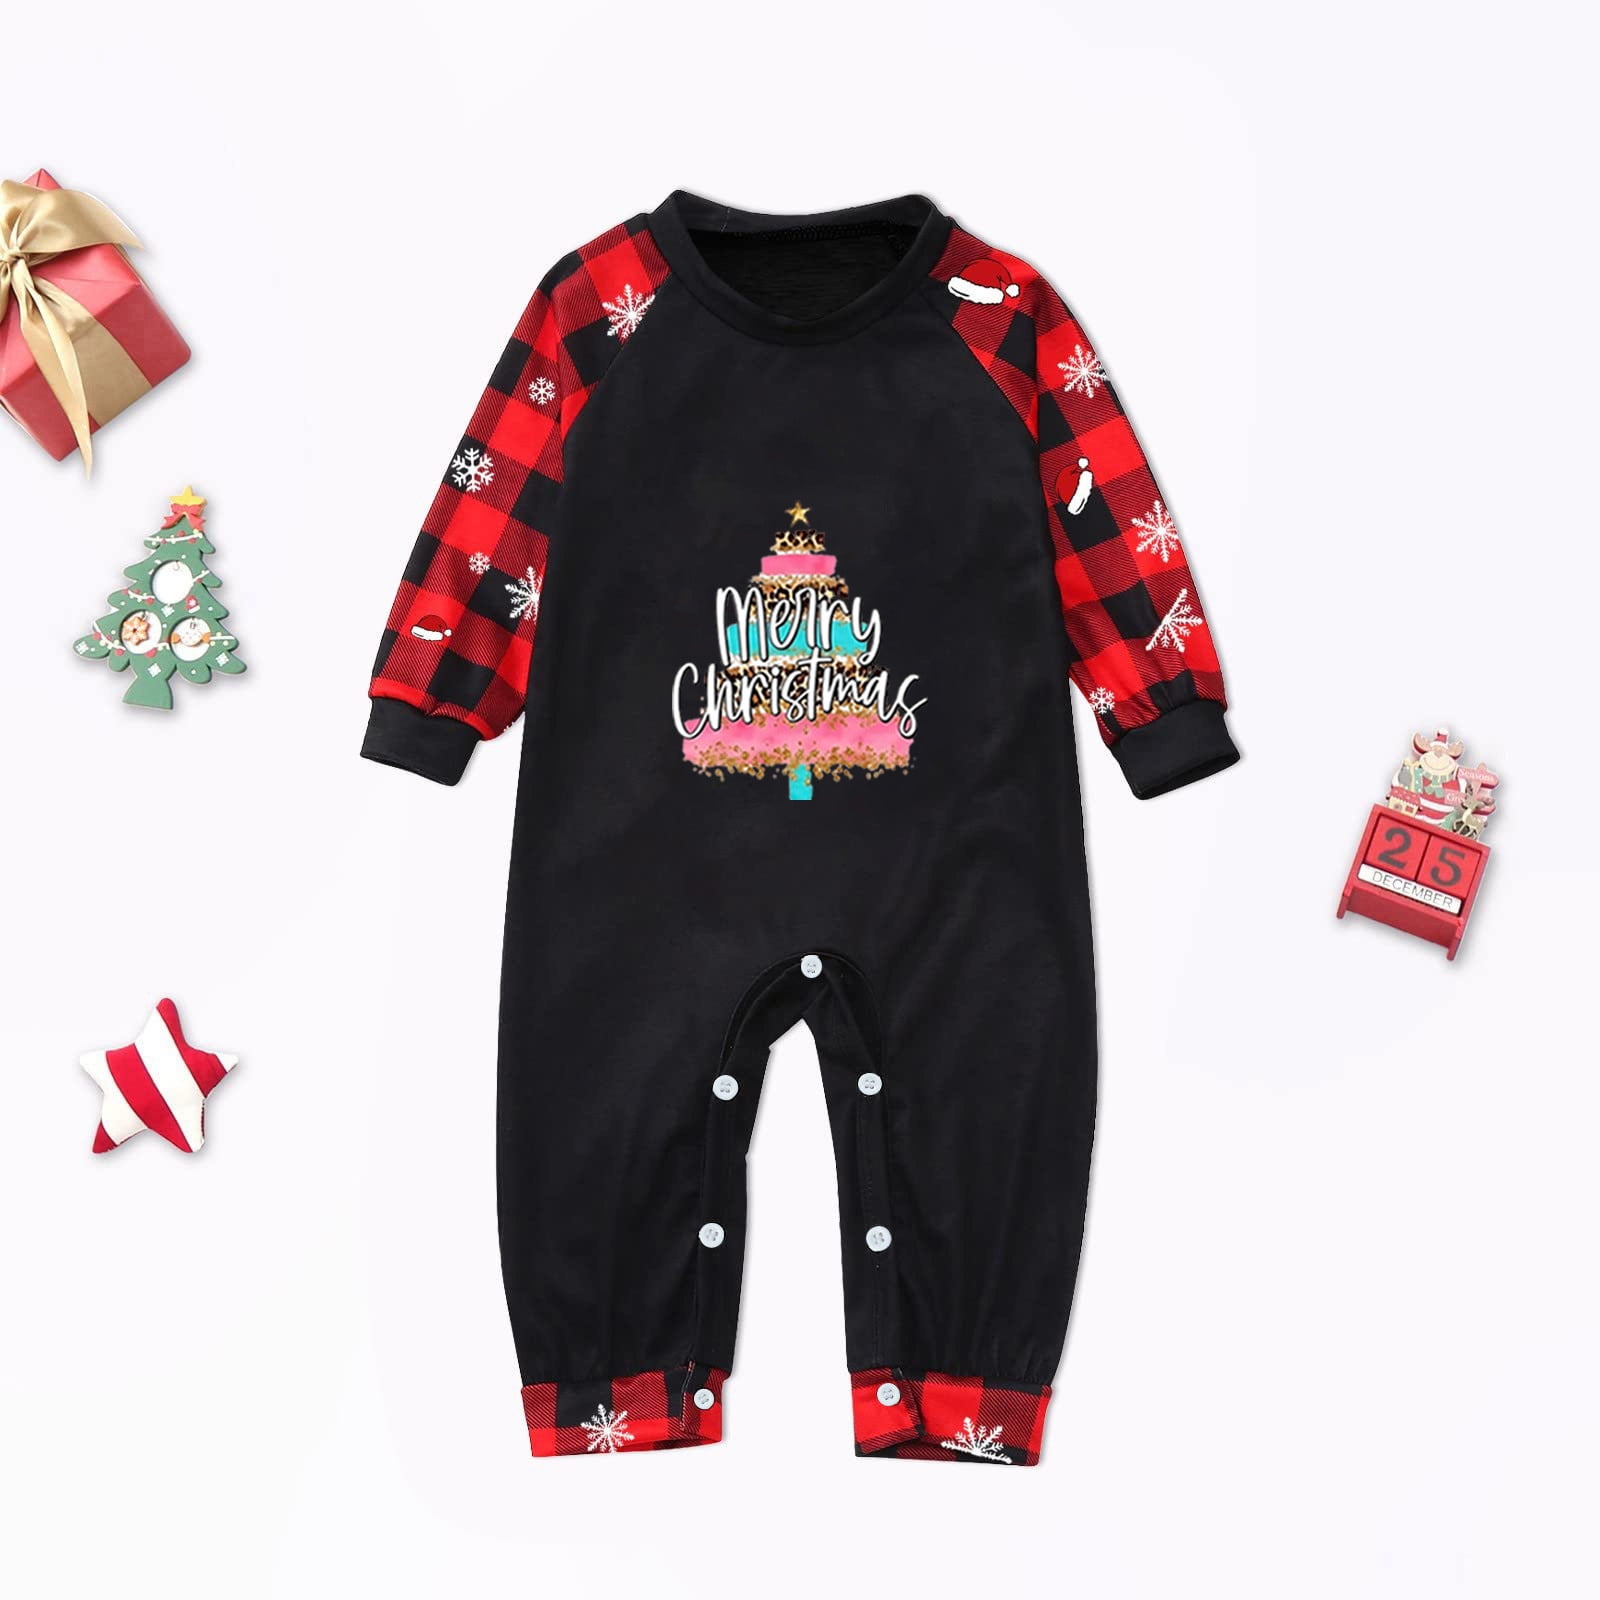 Virmaxy Family Matching Christmas Pajamas Two-piece Set Toddler Baby ...